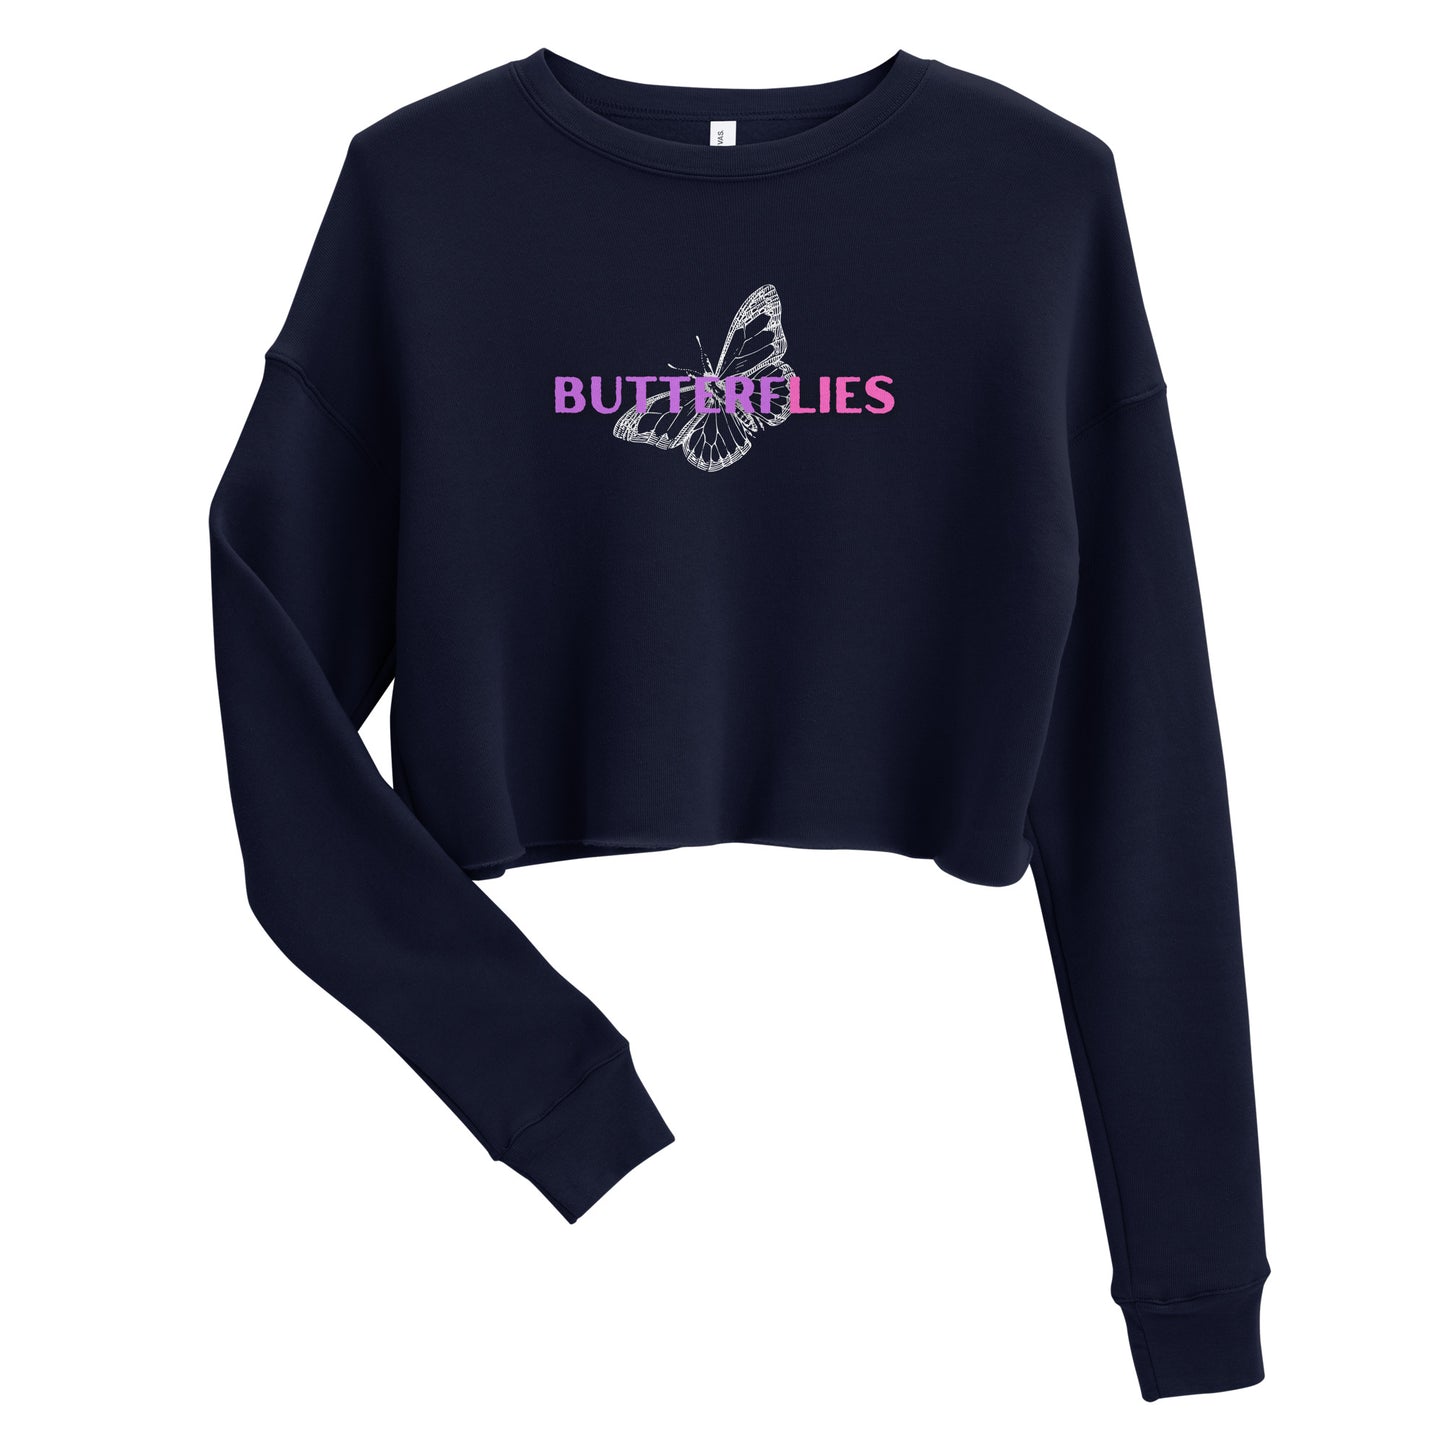 Whispers Of Wings Butterflies Women's Crop Sweatshirt - Navy